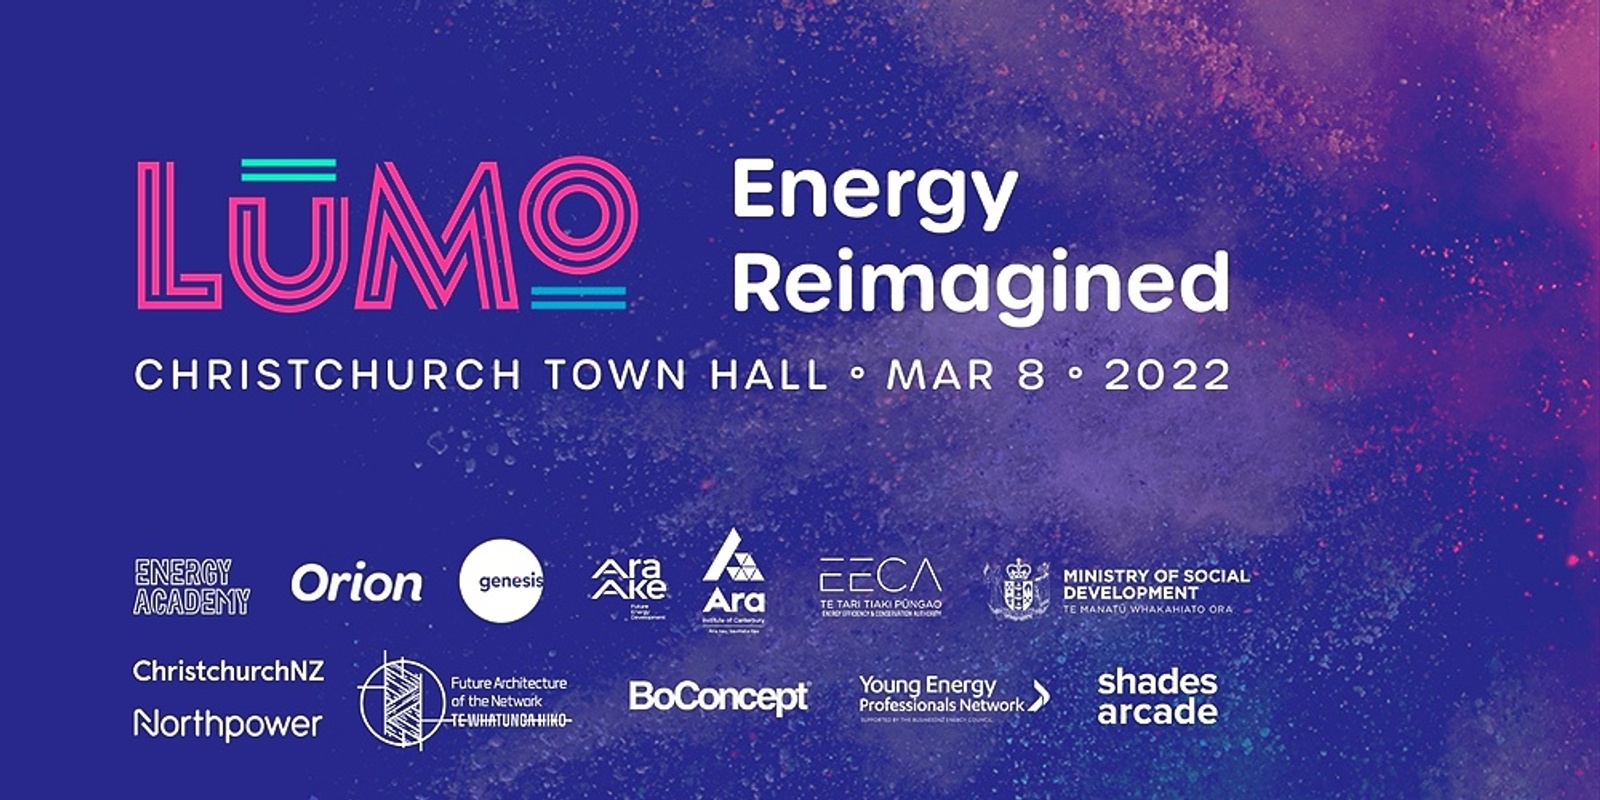 Banner image for Lumo - Energy Reimagined Symposium